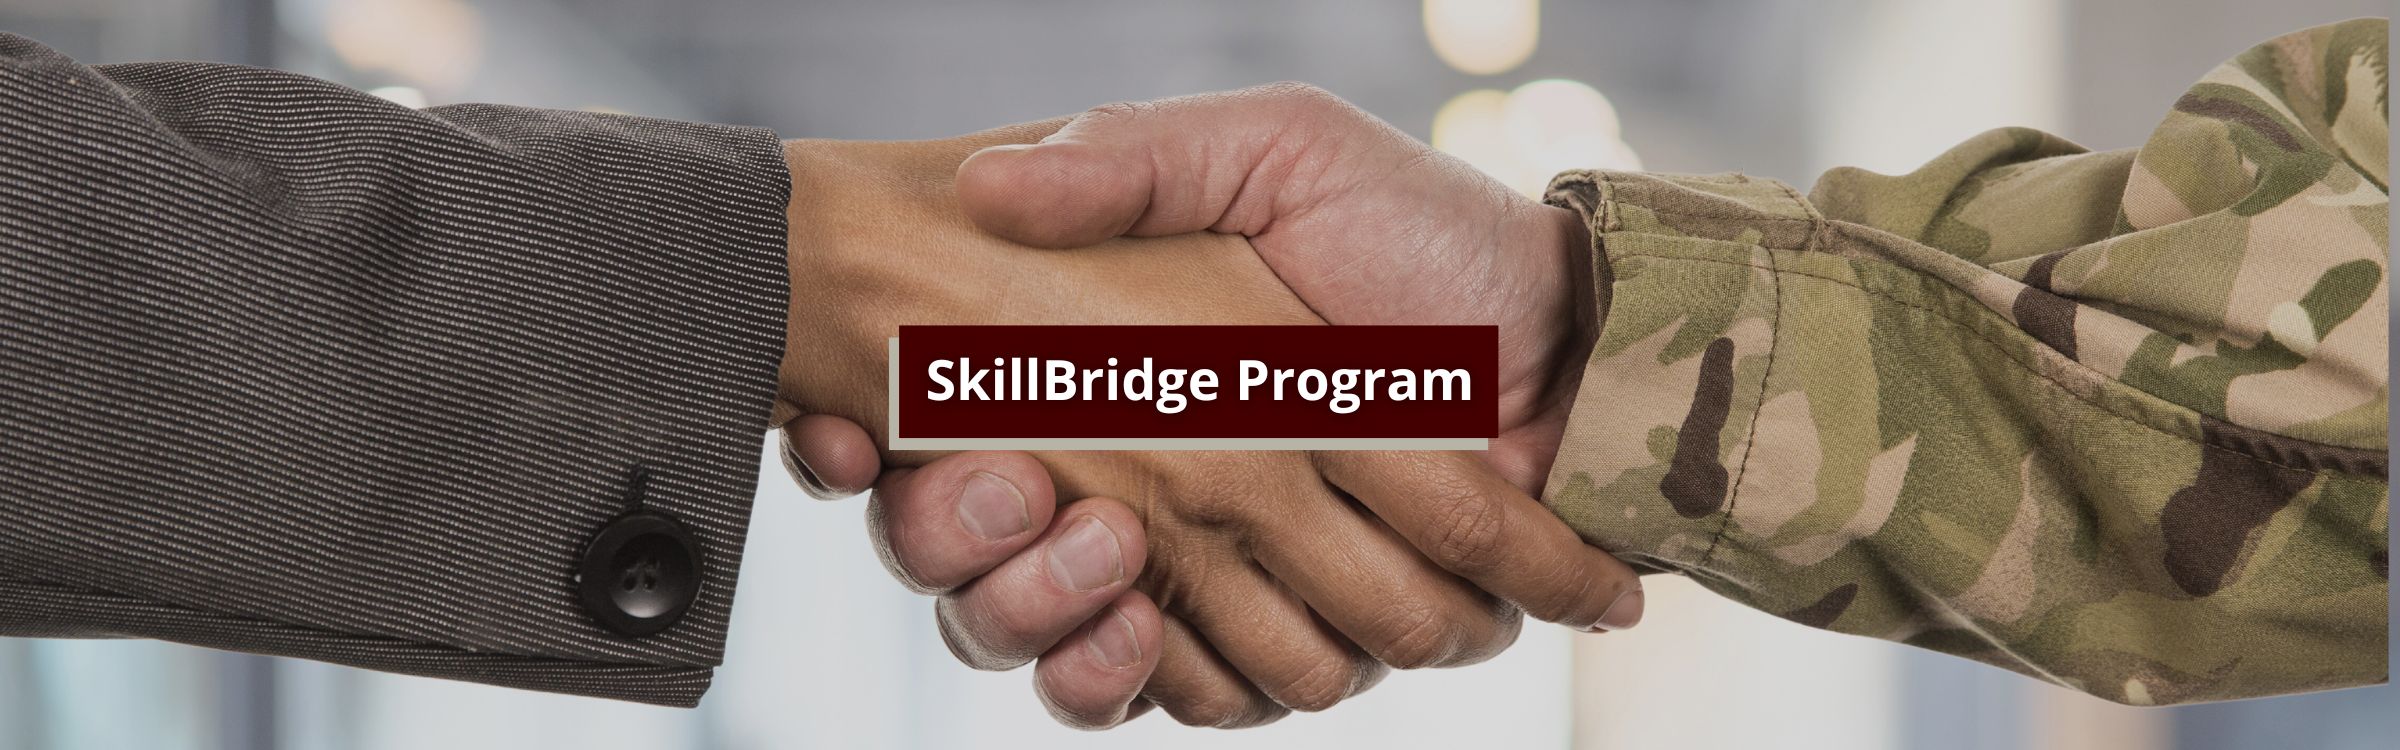 SkillBridge Program